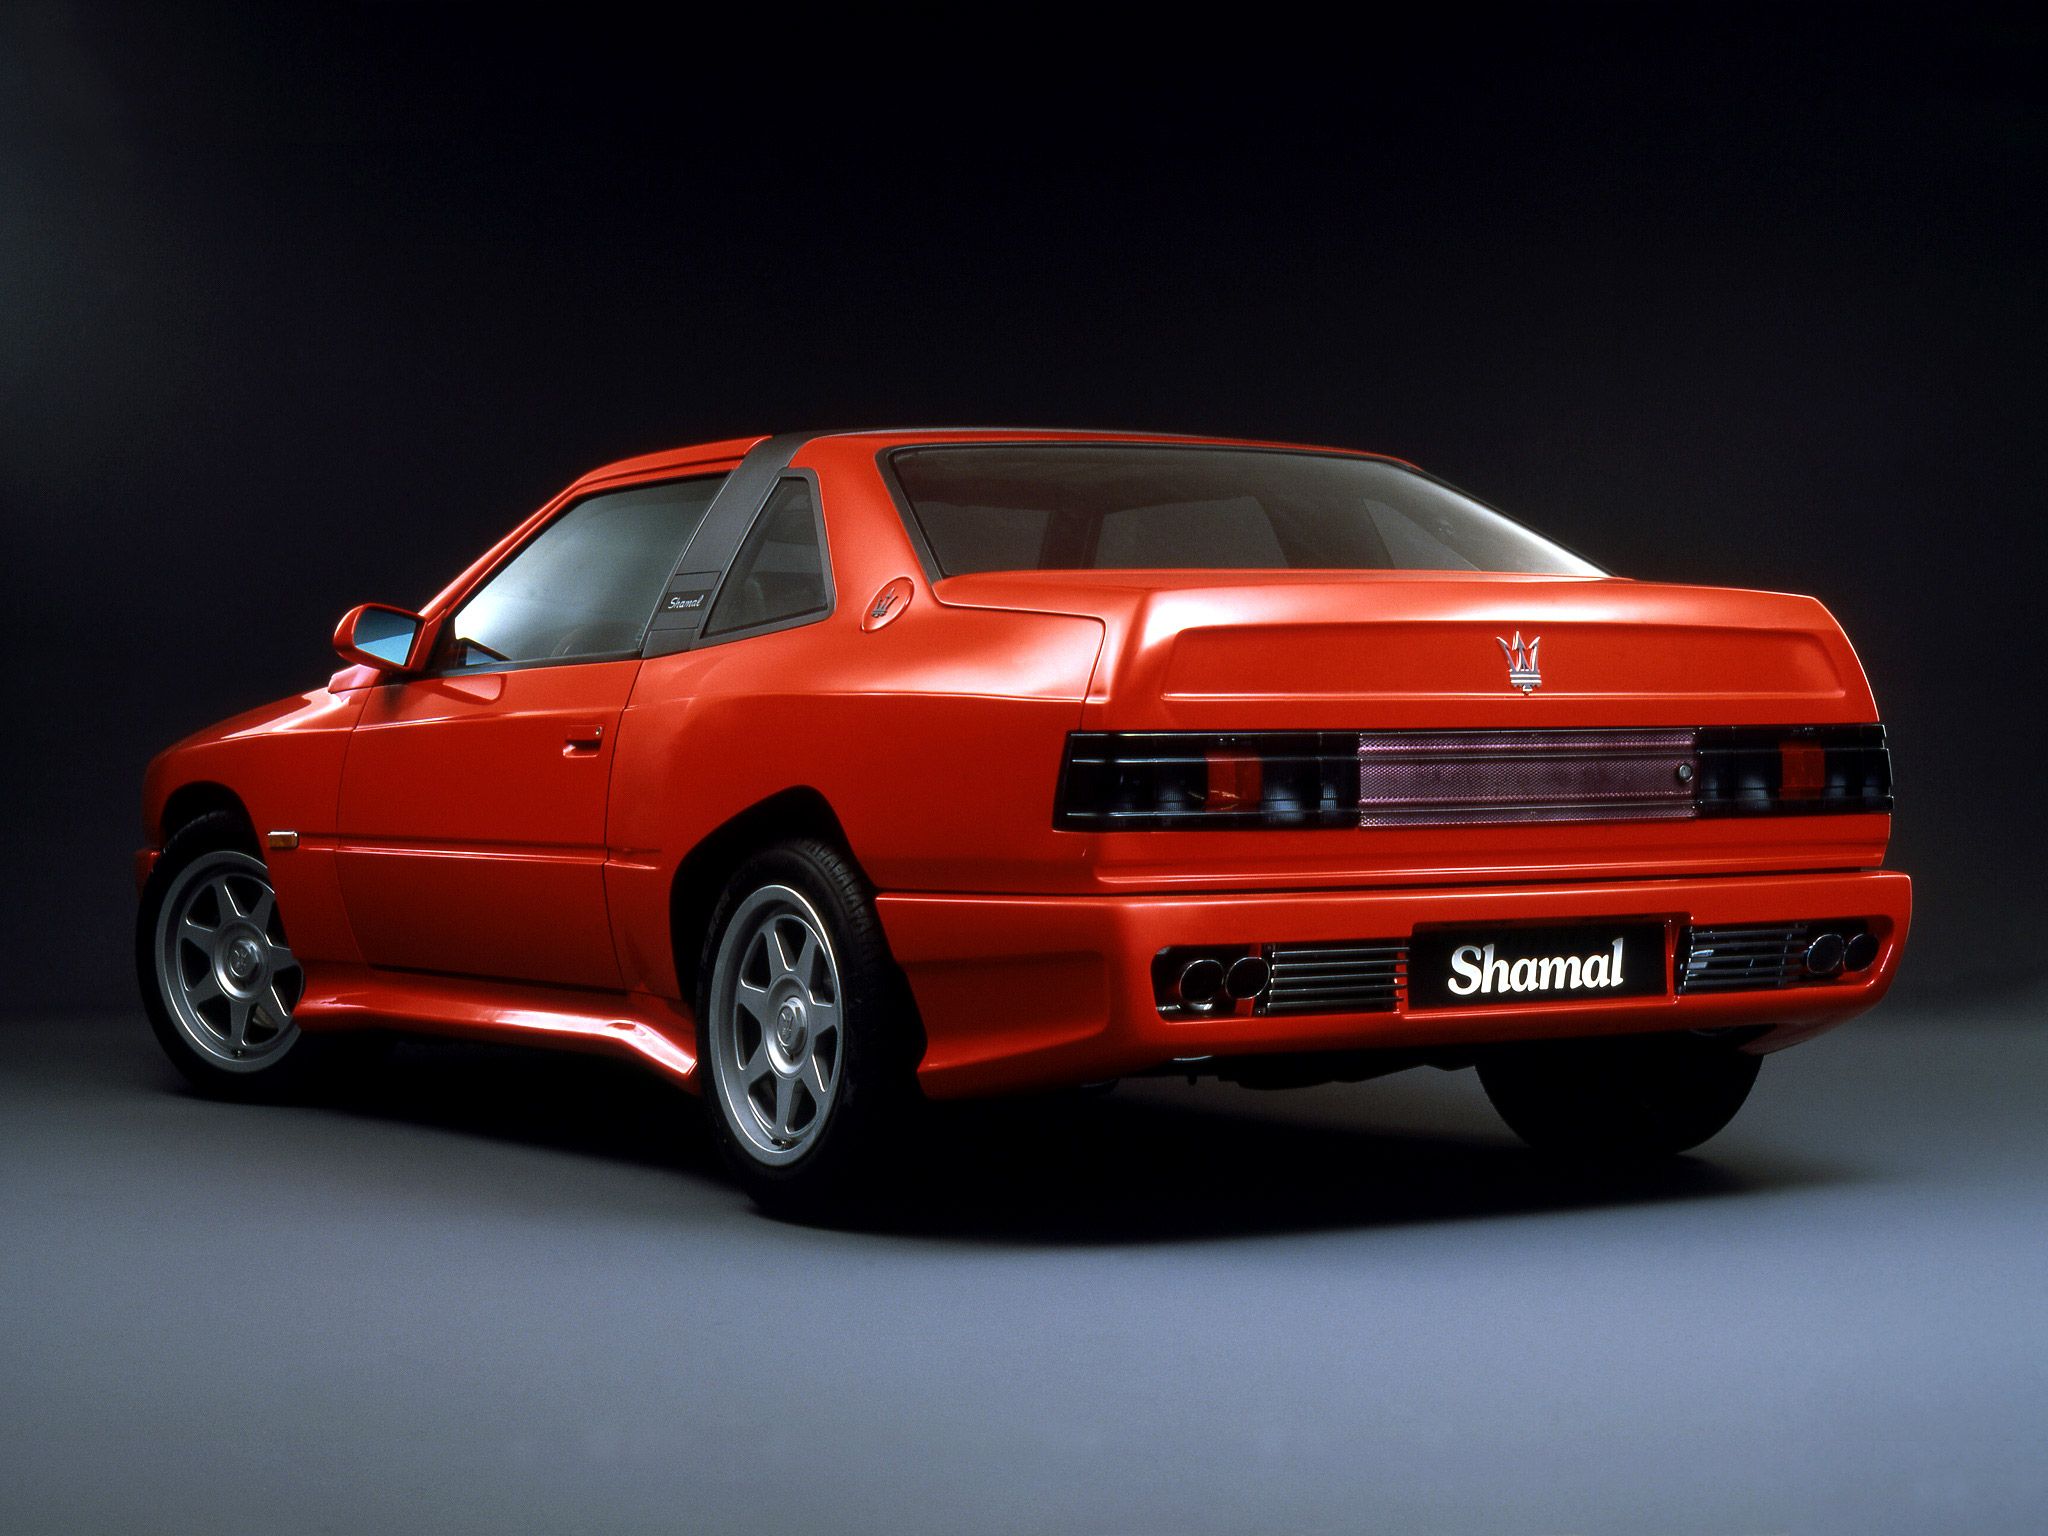 1990 Maserati Shamal in red, back left side